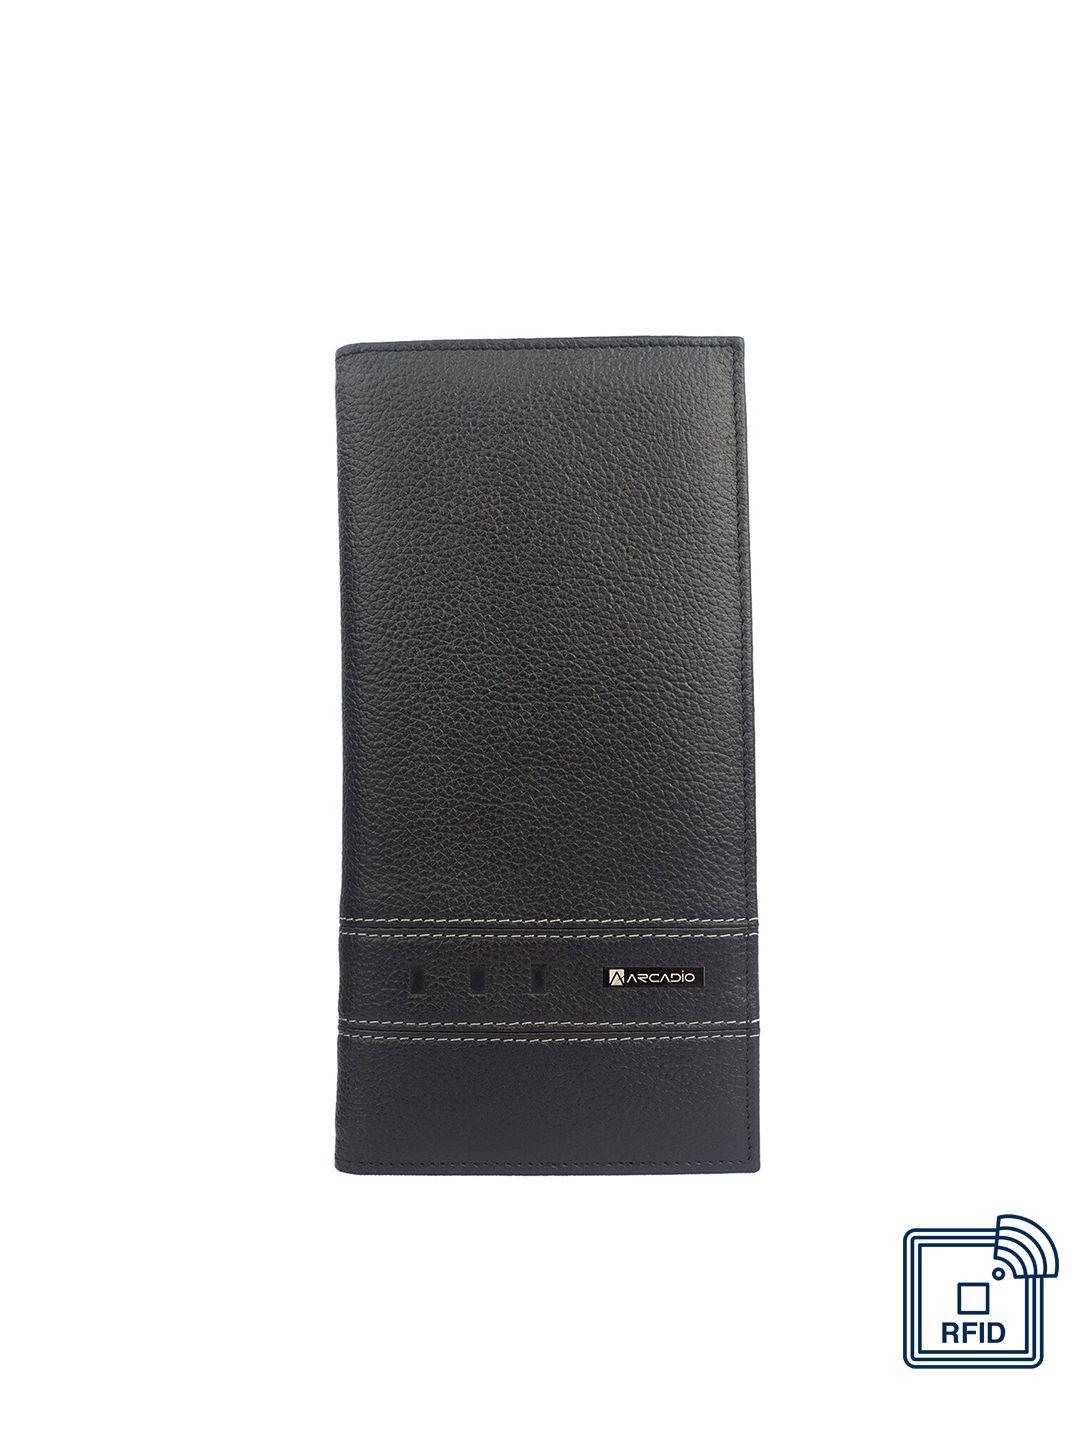 arcadio unisex black textured leather rfid two fold wallet